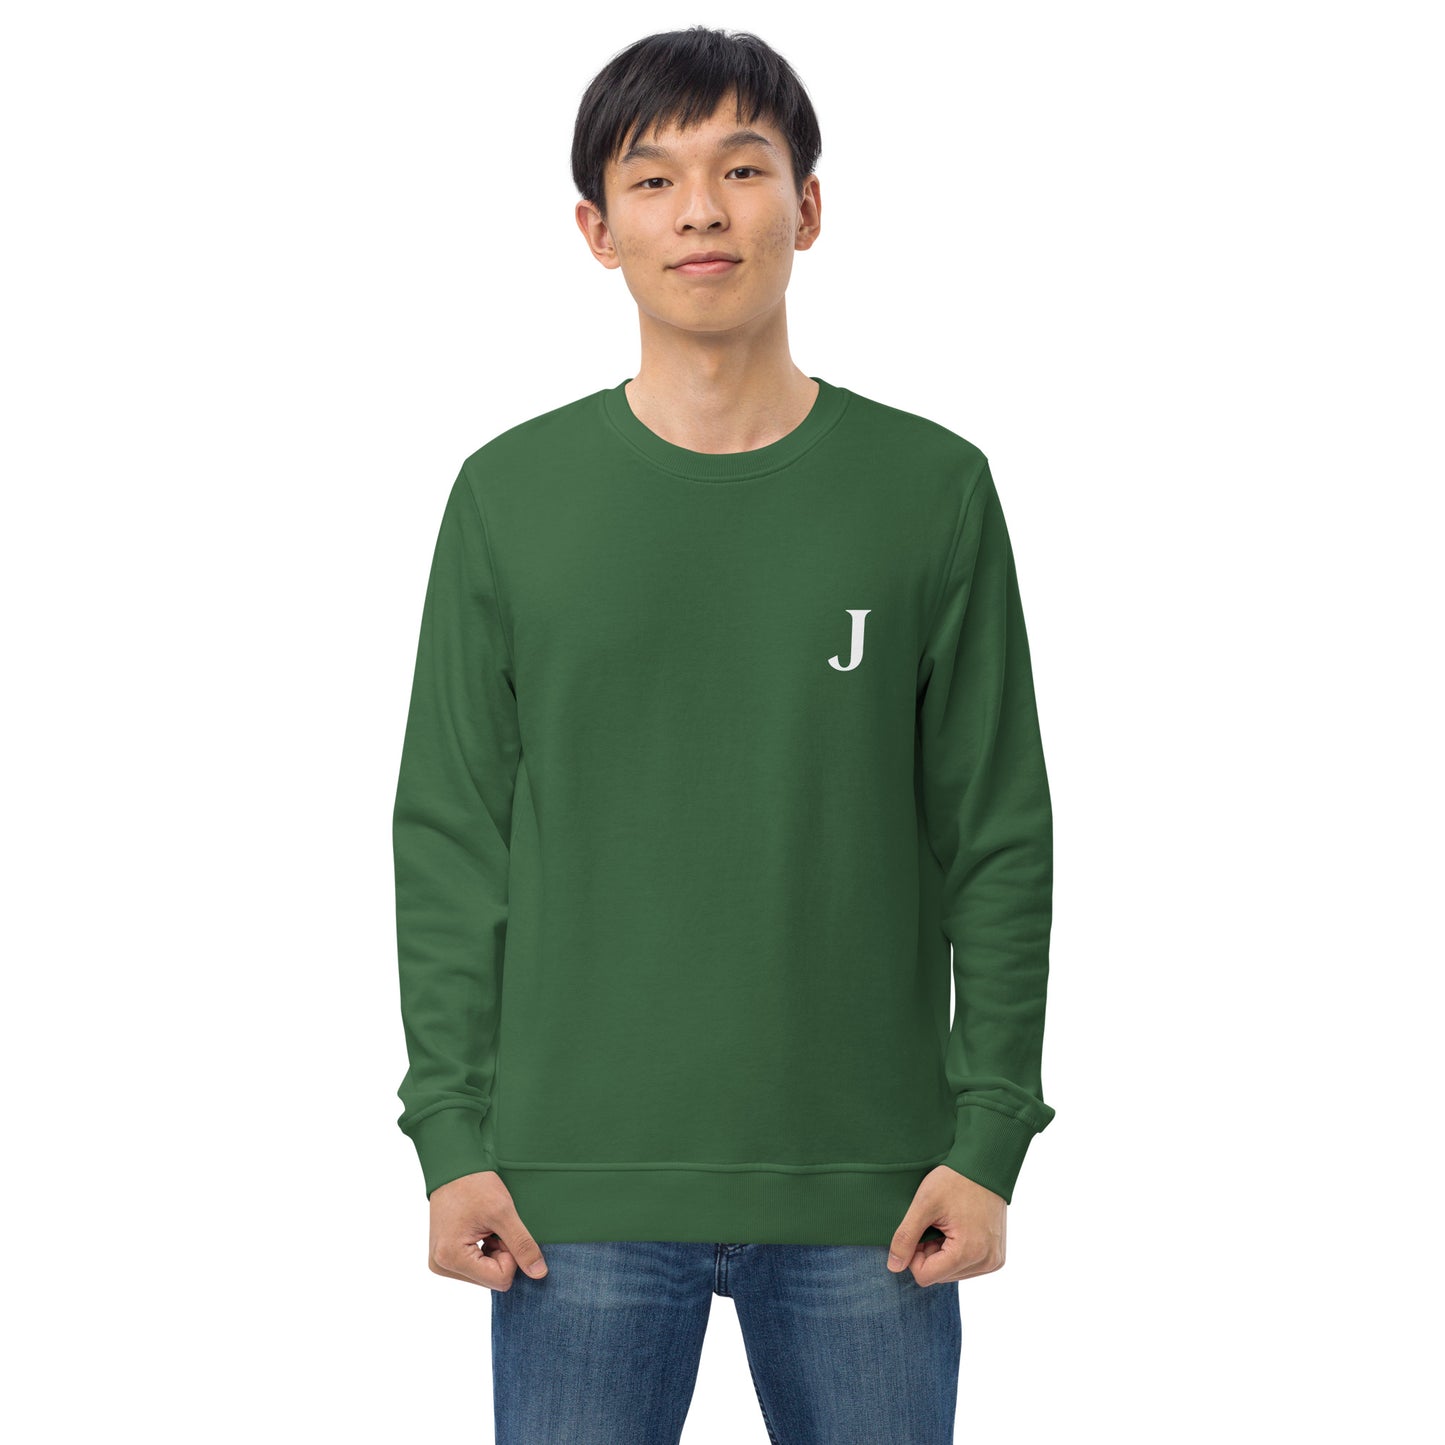 The Juggernaut Collection - Small "J" Sweatshirt